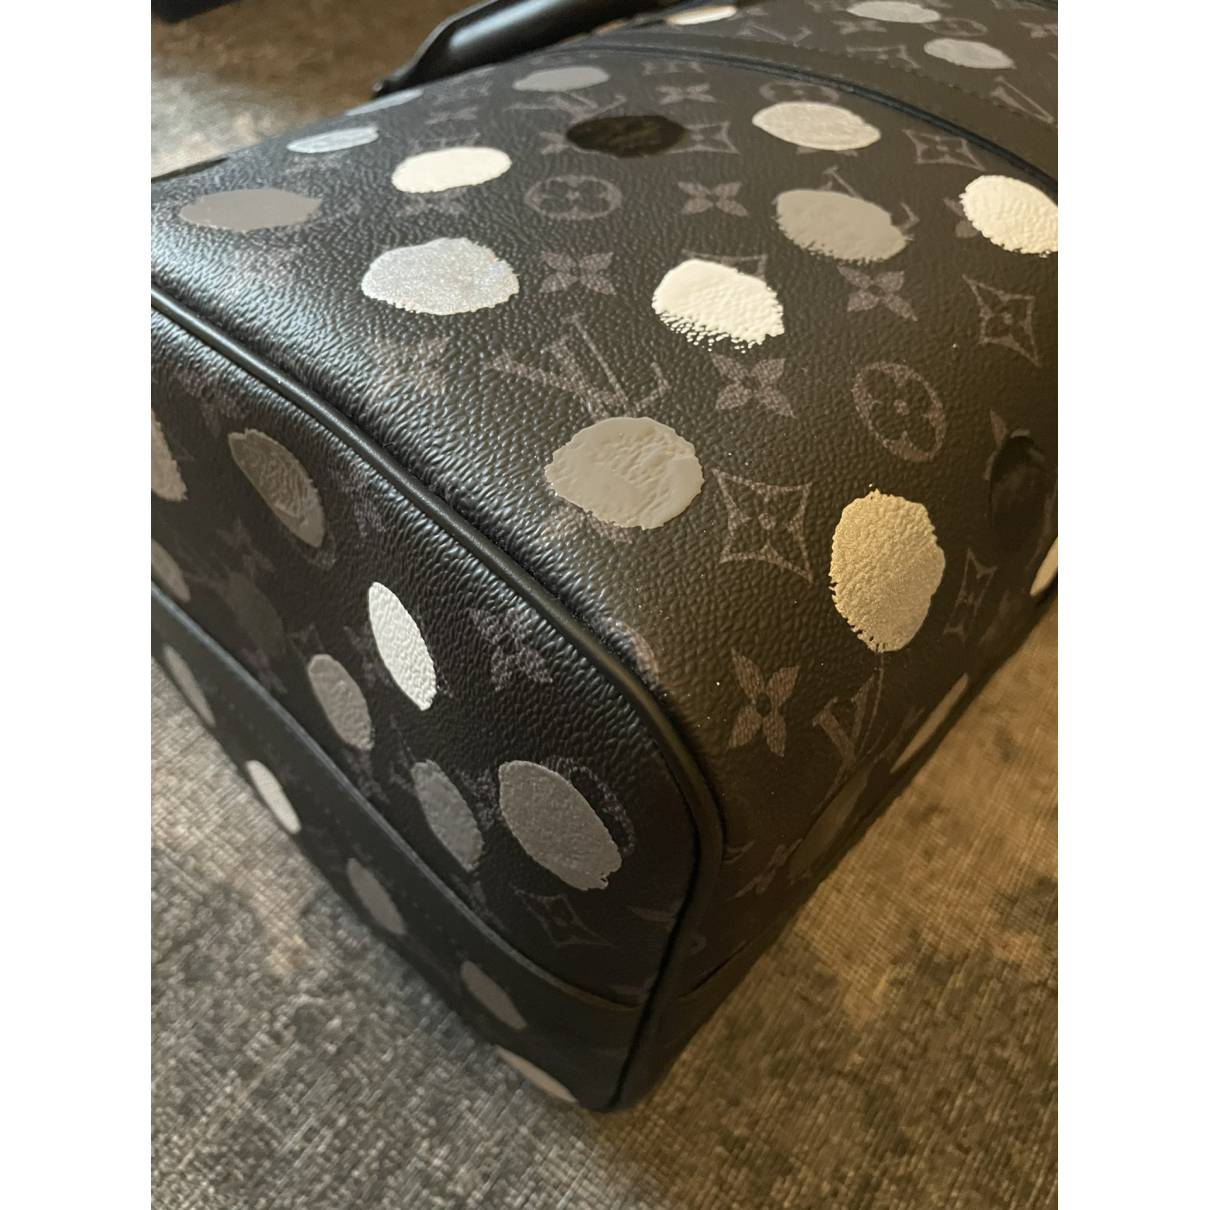 Louis VUITTON Travel bag Keepall model in monogram canv…